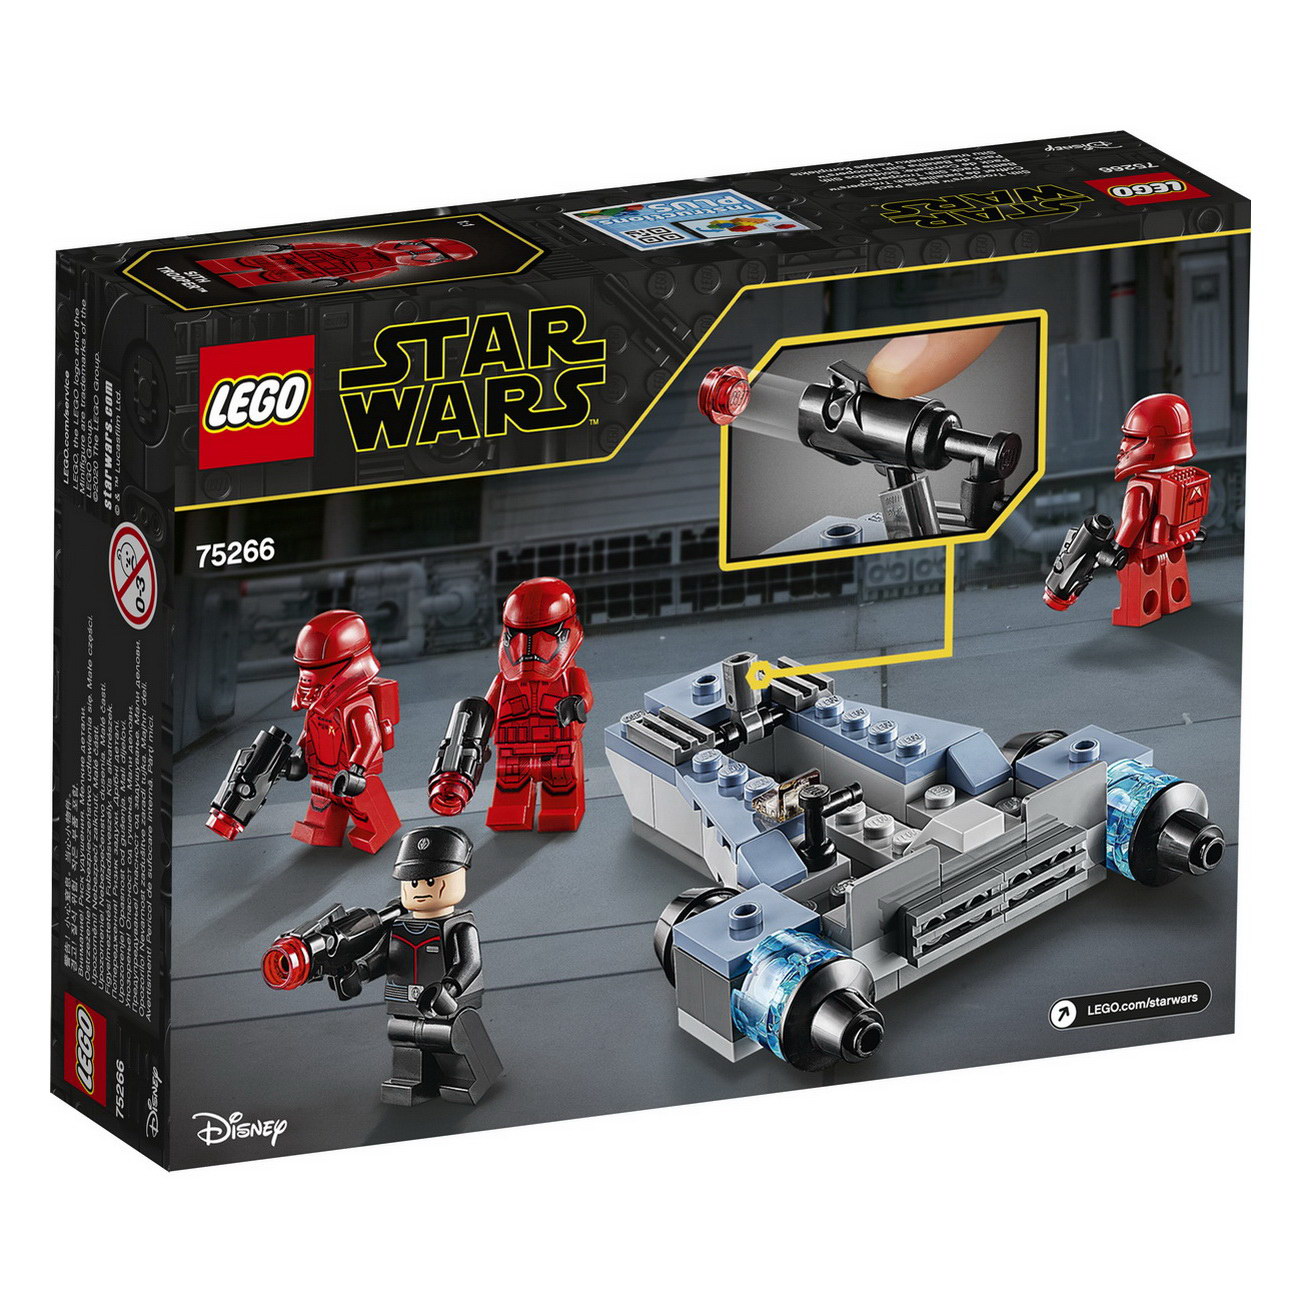 LEGO Star Wars - Sith Trooper Battle Pack (75266)